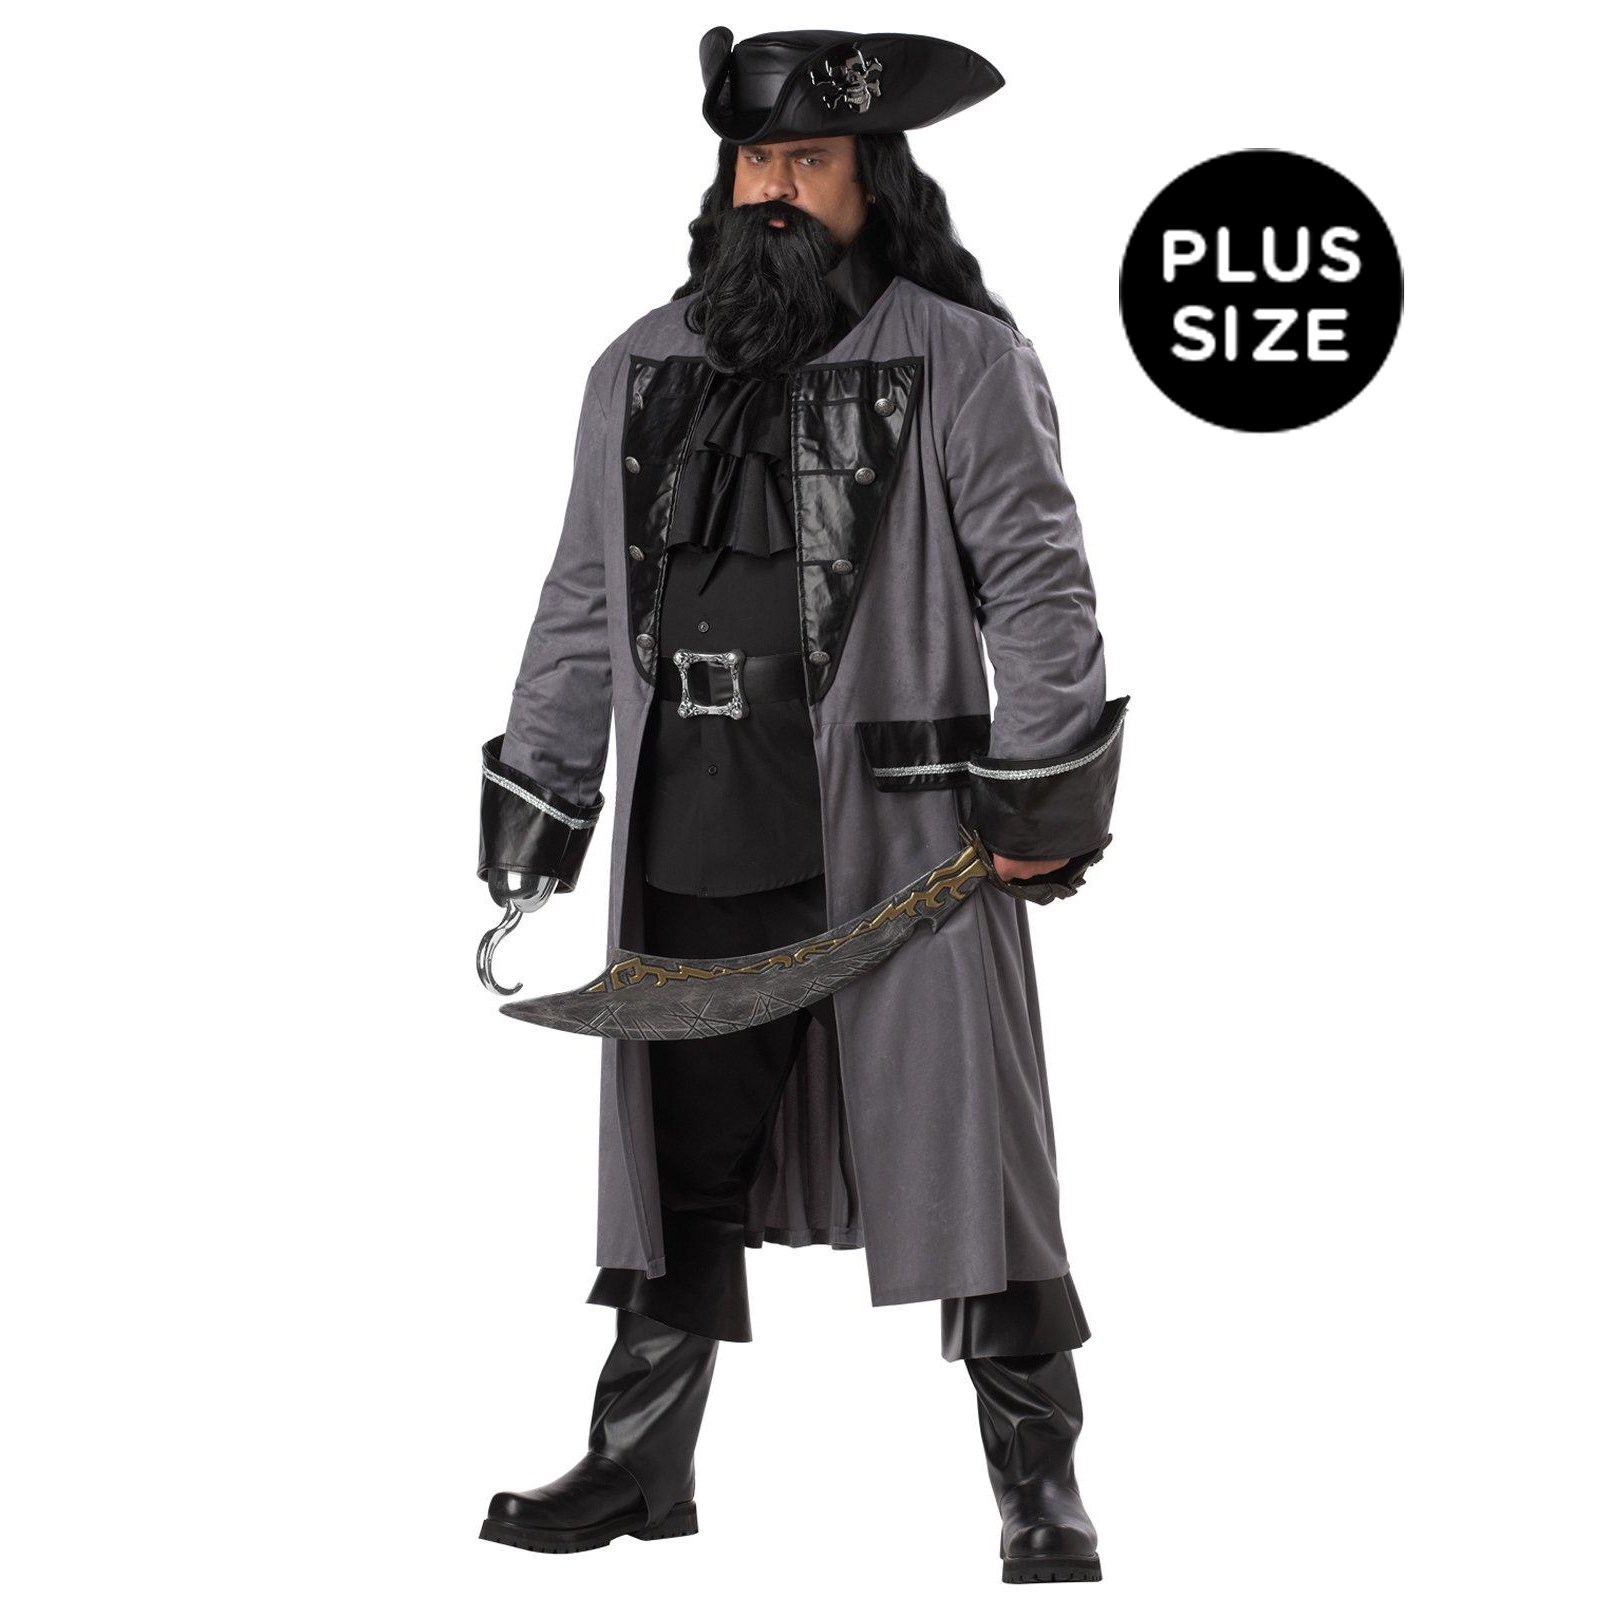 Blackbeard the Pirate Adult Plus Costume